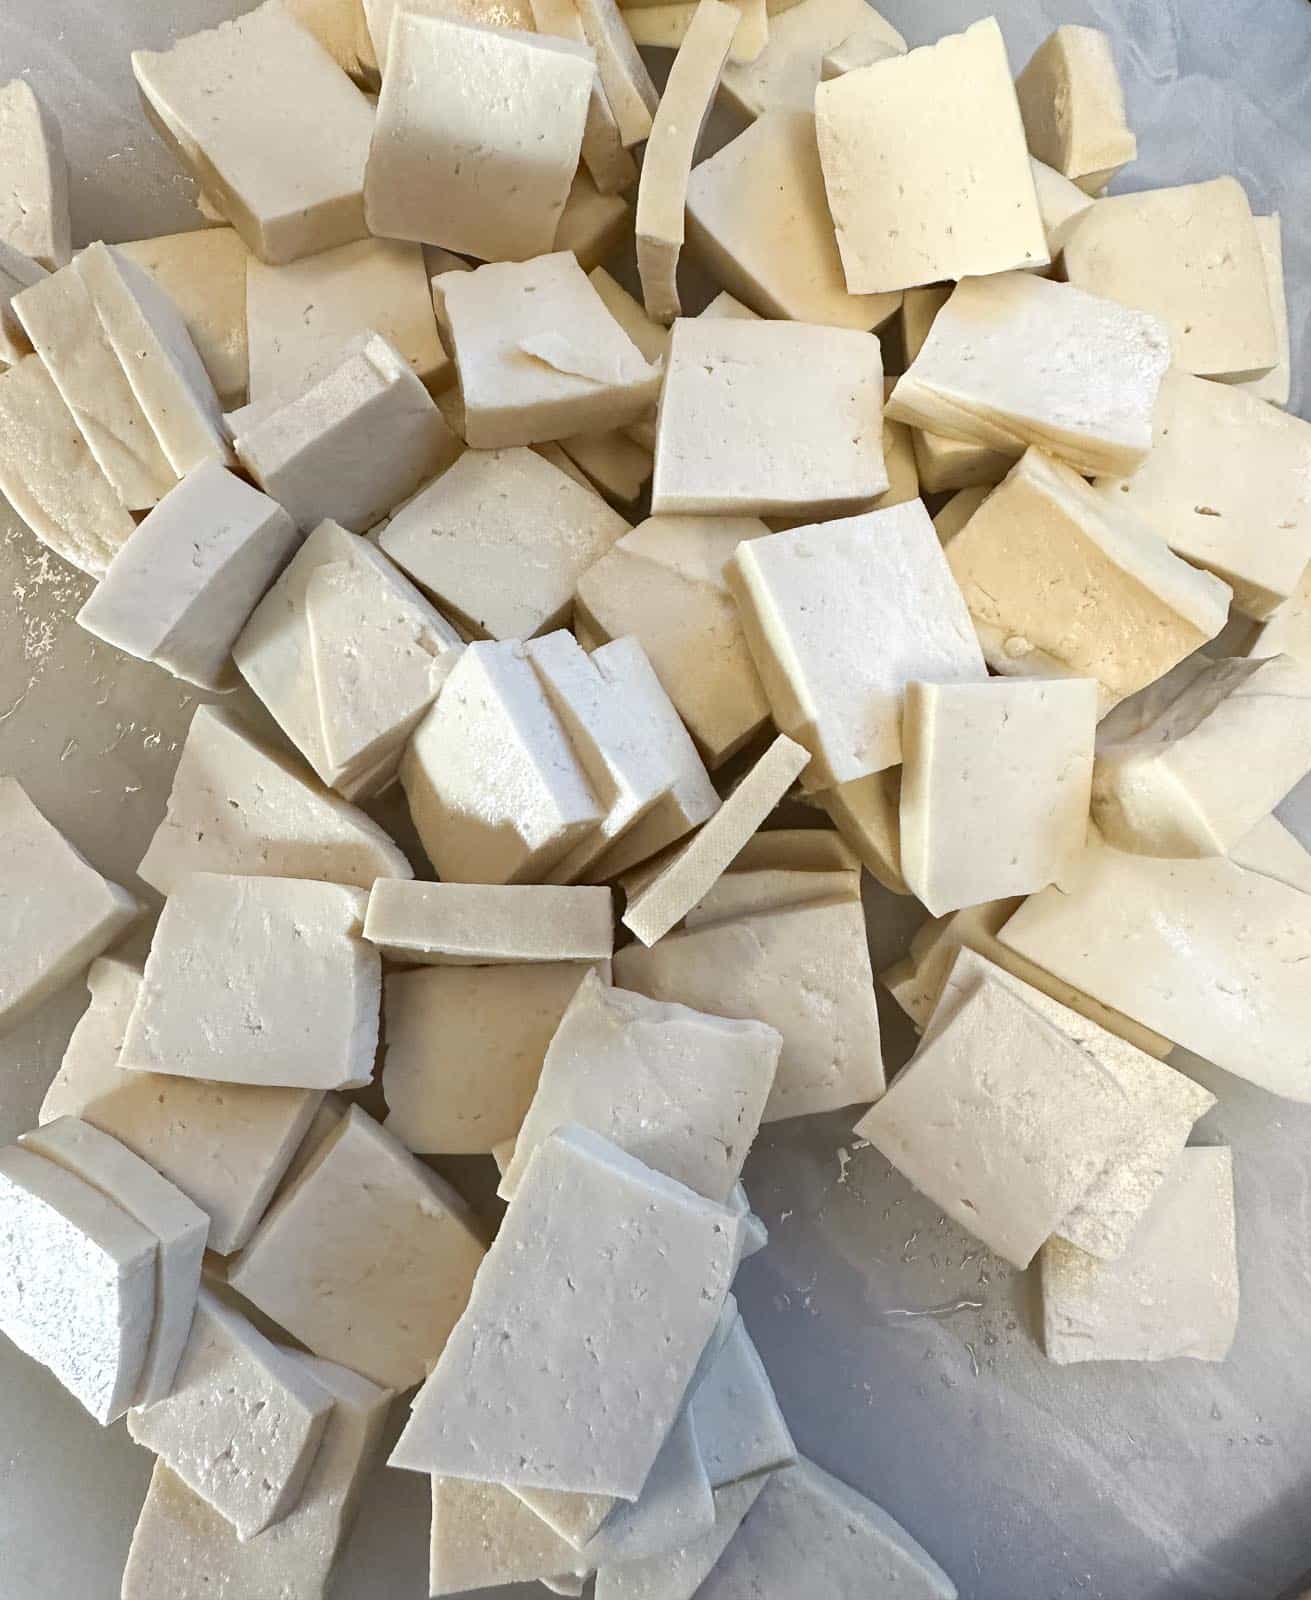 tofu cut into bite sized pieces.